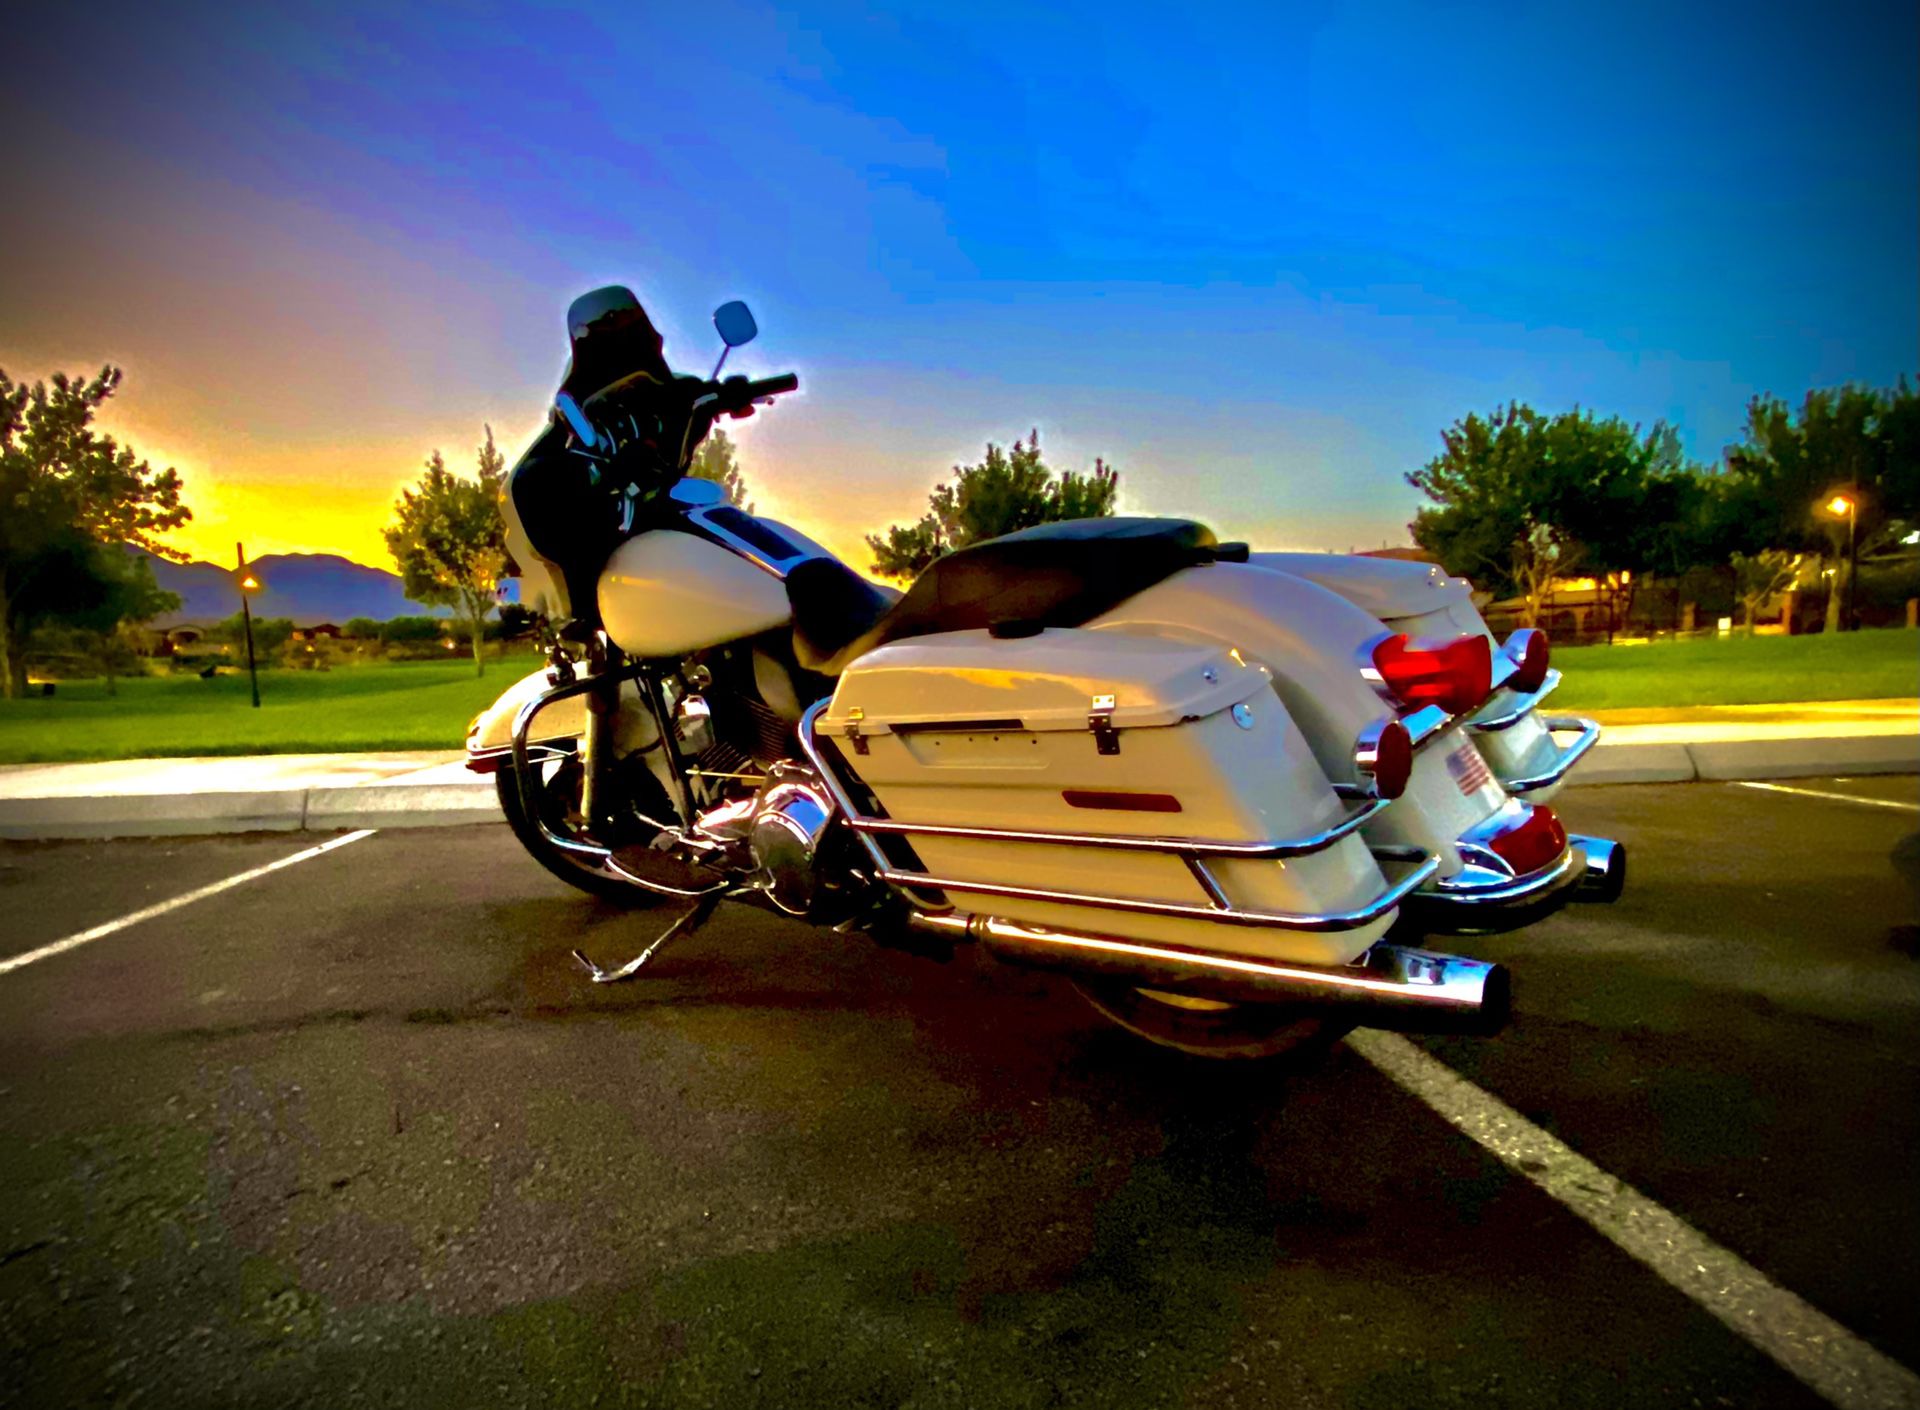 2013 Harley-Davidson Electra-Glide Police Model never dropped